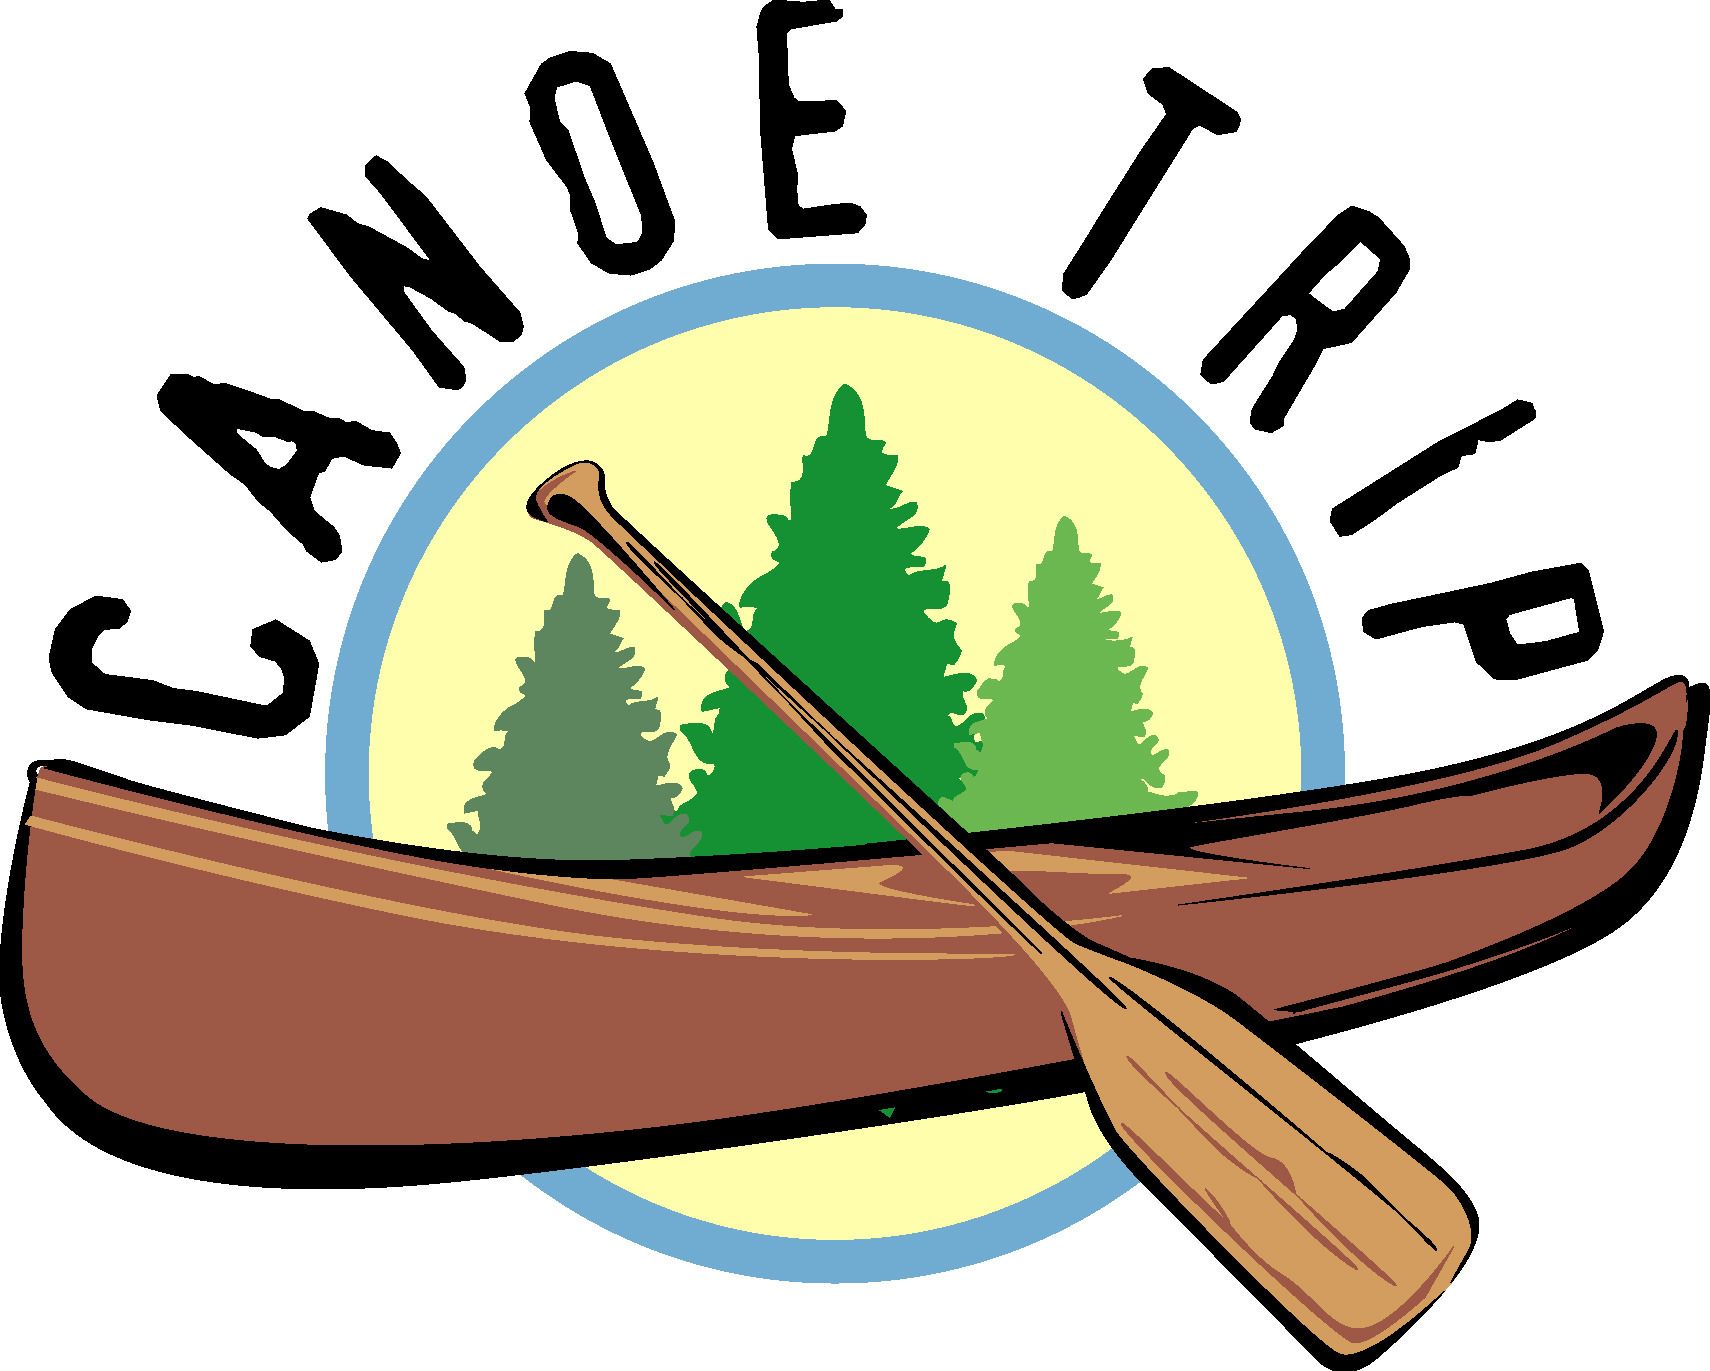 Canoe clipart camp canoe, Picture #2336901 canoe clipart camp canoe